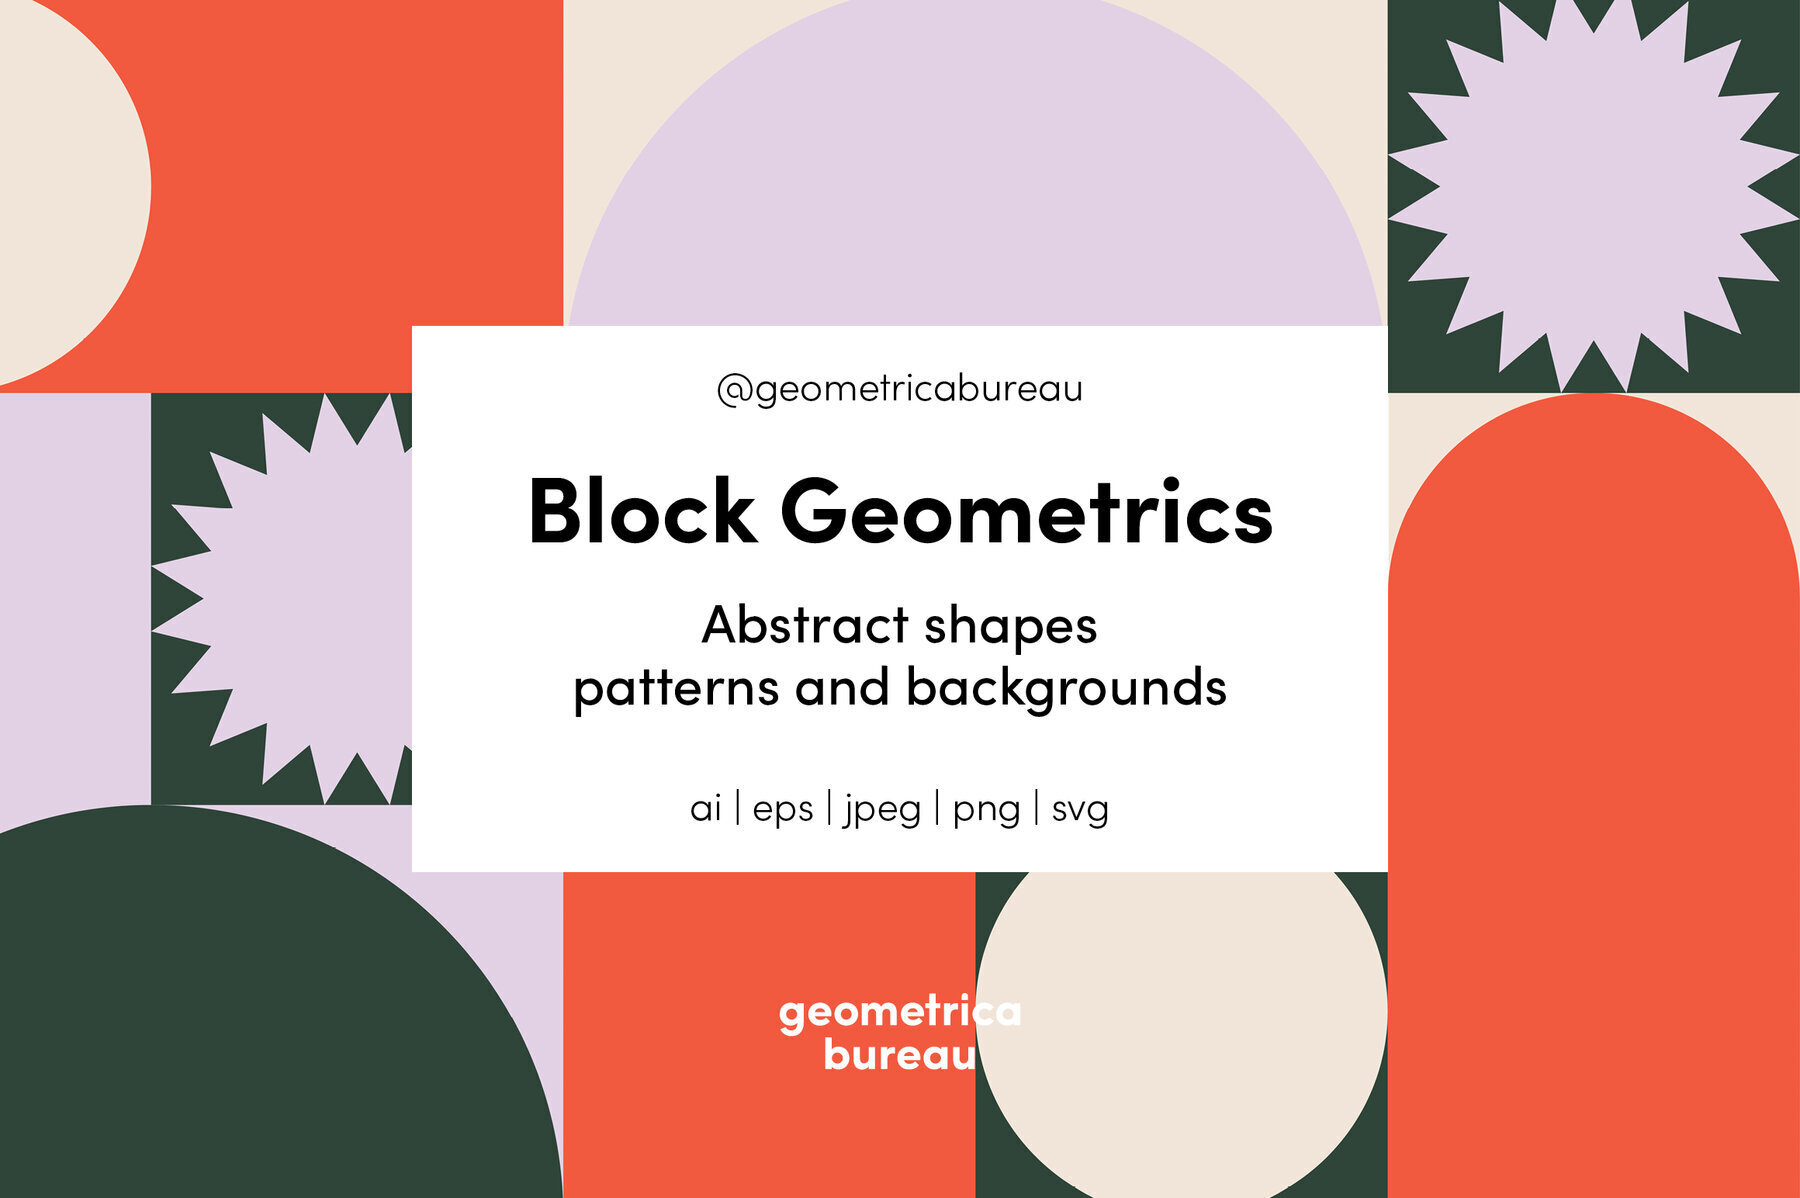 Block Geometrics